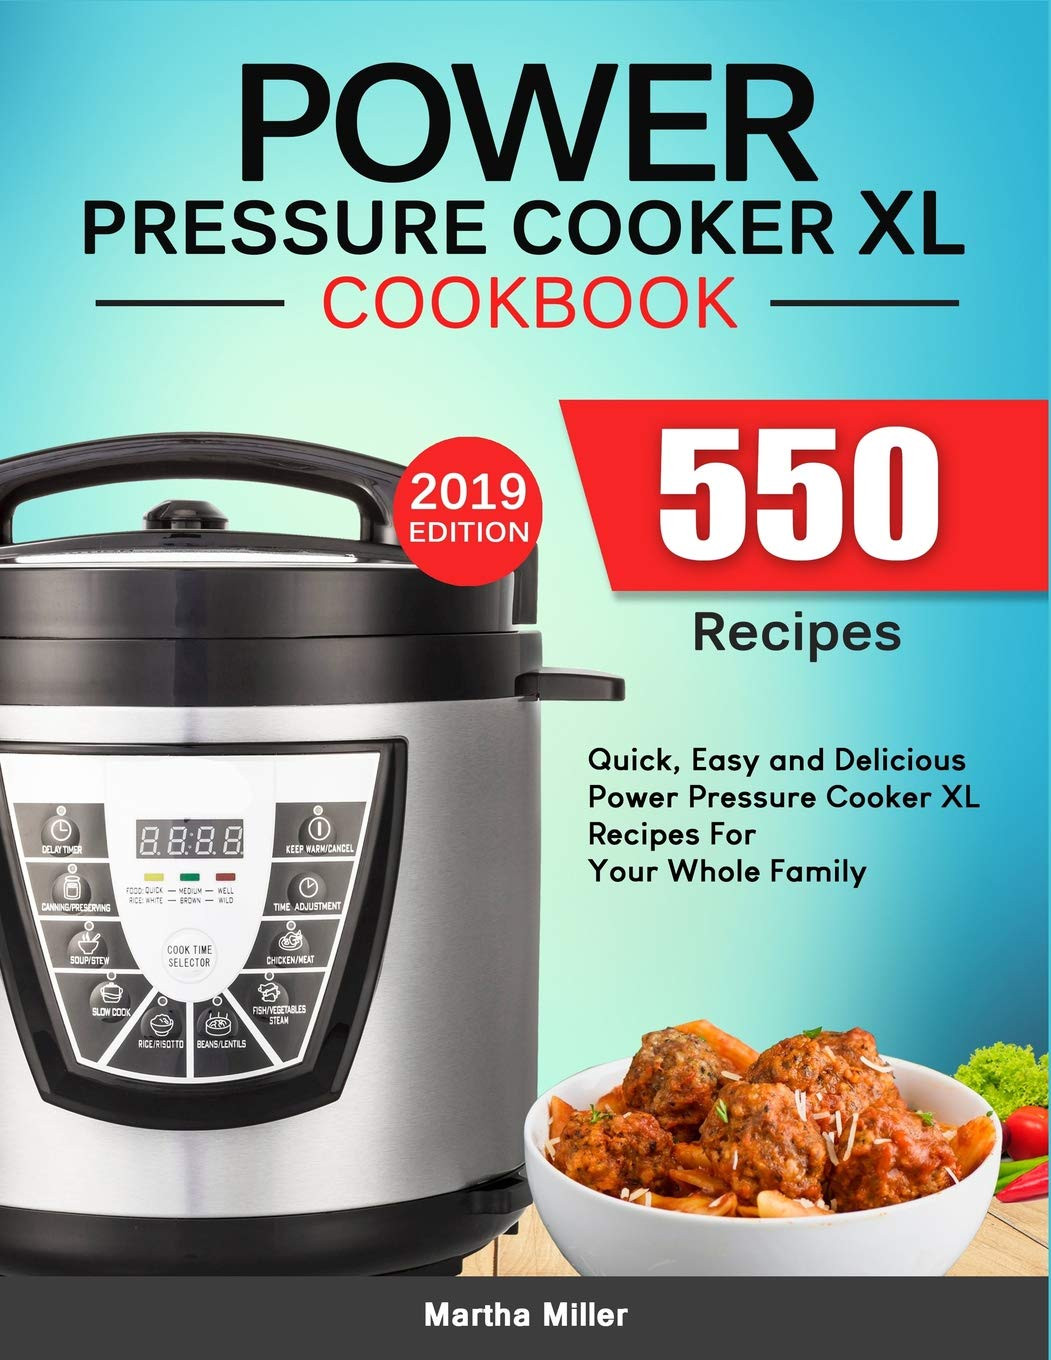 Power Pressure Cooker Xl Fish Recipes
 Kraft kielbasa recipes